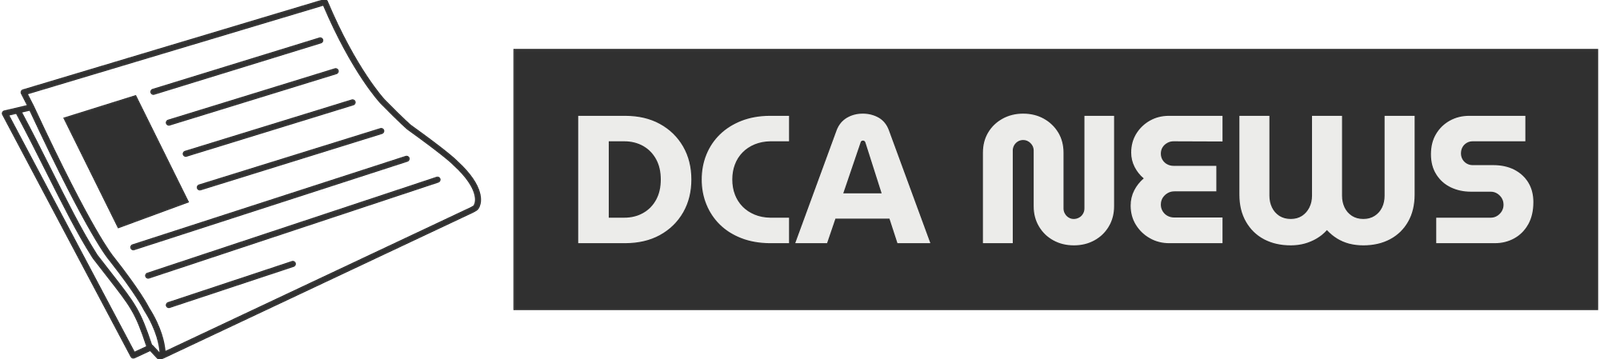 DCA News